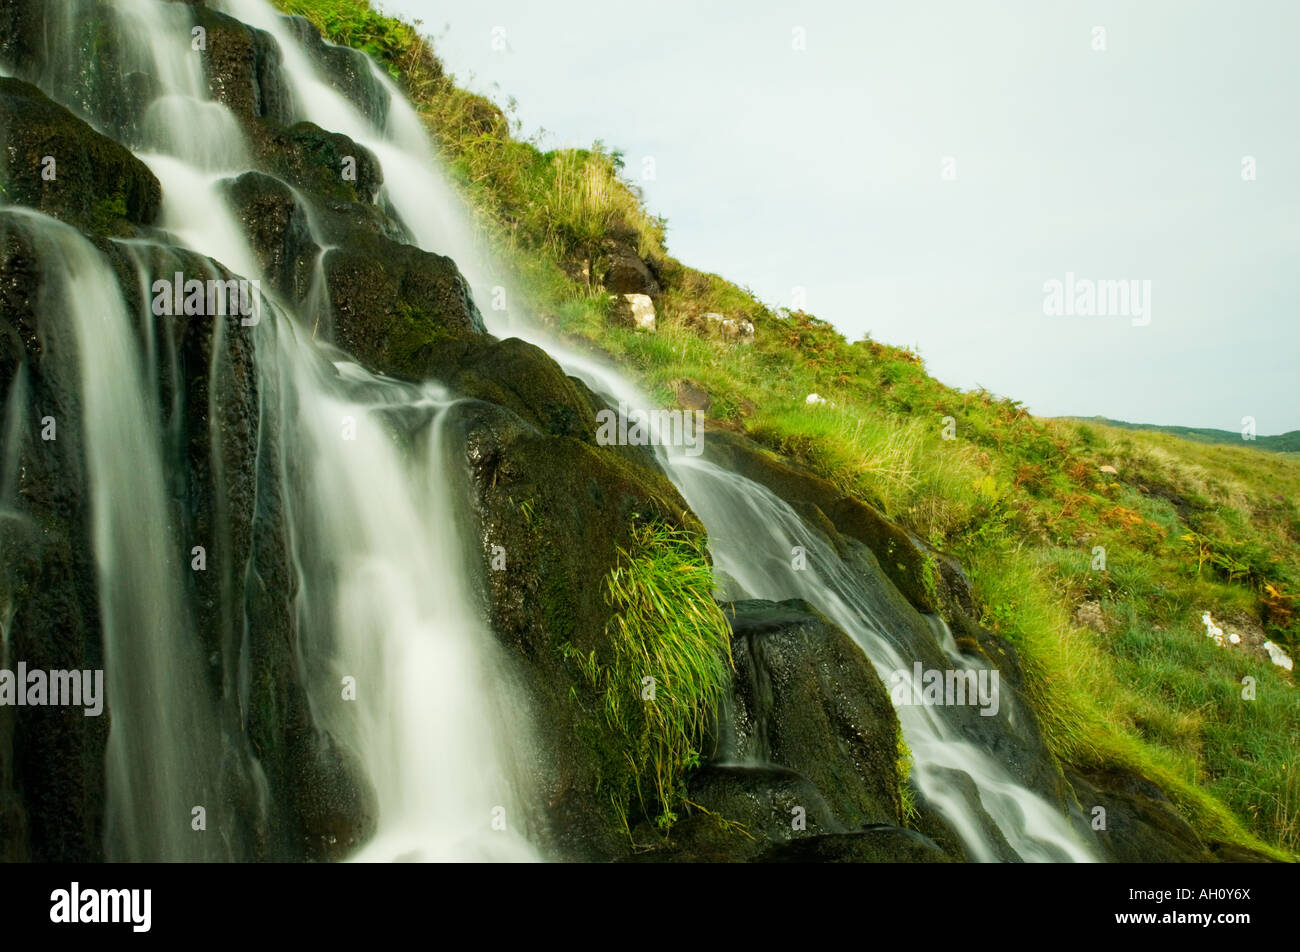 Waterfall close up montrant les roches, mousse et d'herbe Banque D'Images